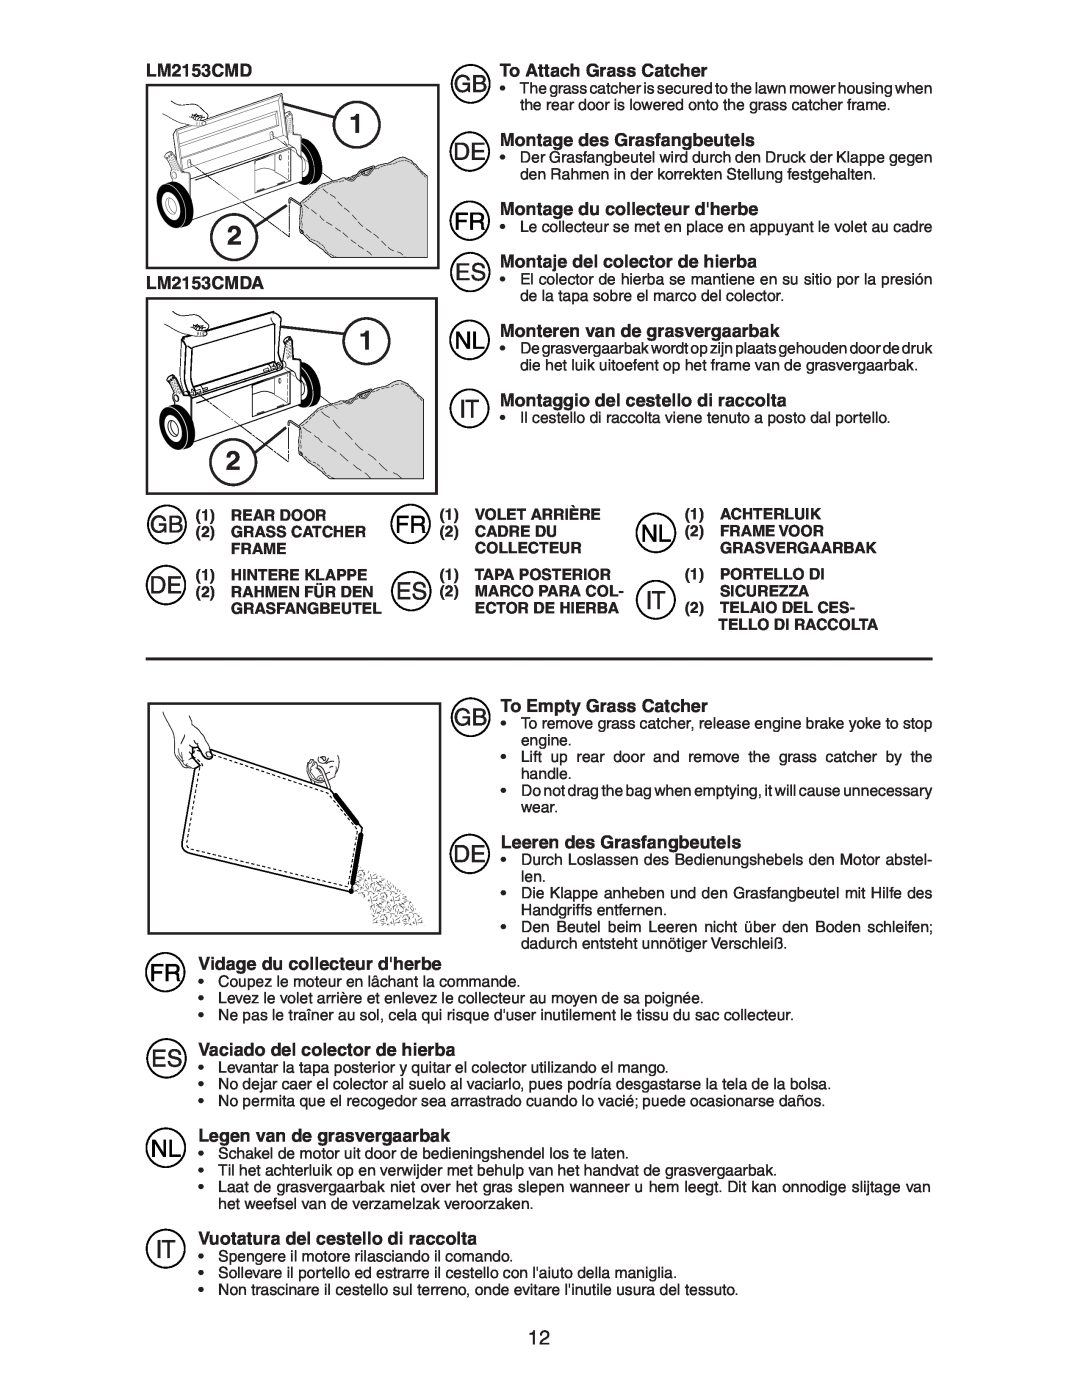 Jonsered LM2153CMDA instruction manual To Attach Grass Catcher, Montage des Grasfangbeutels, Montage du collecteur dherbe 